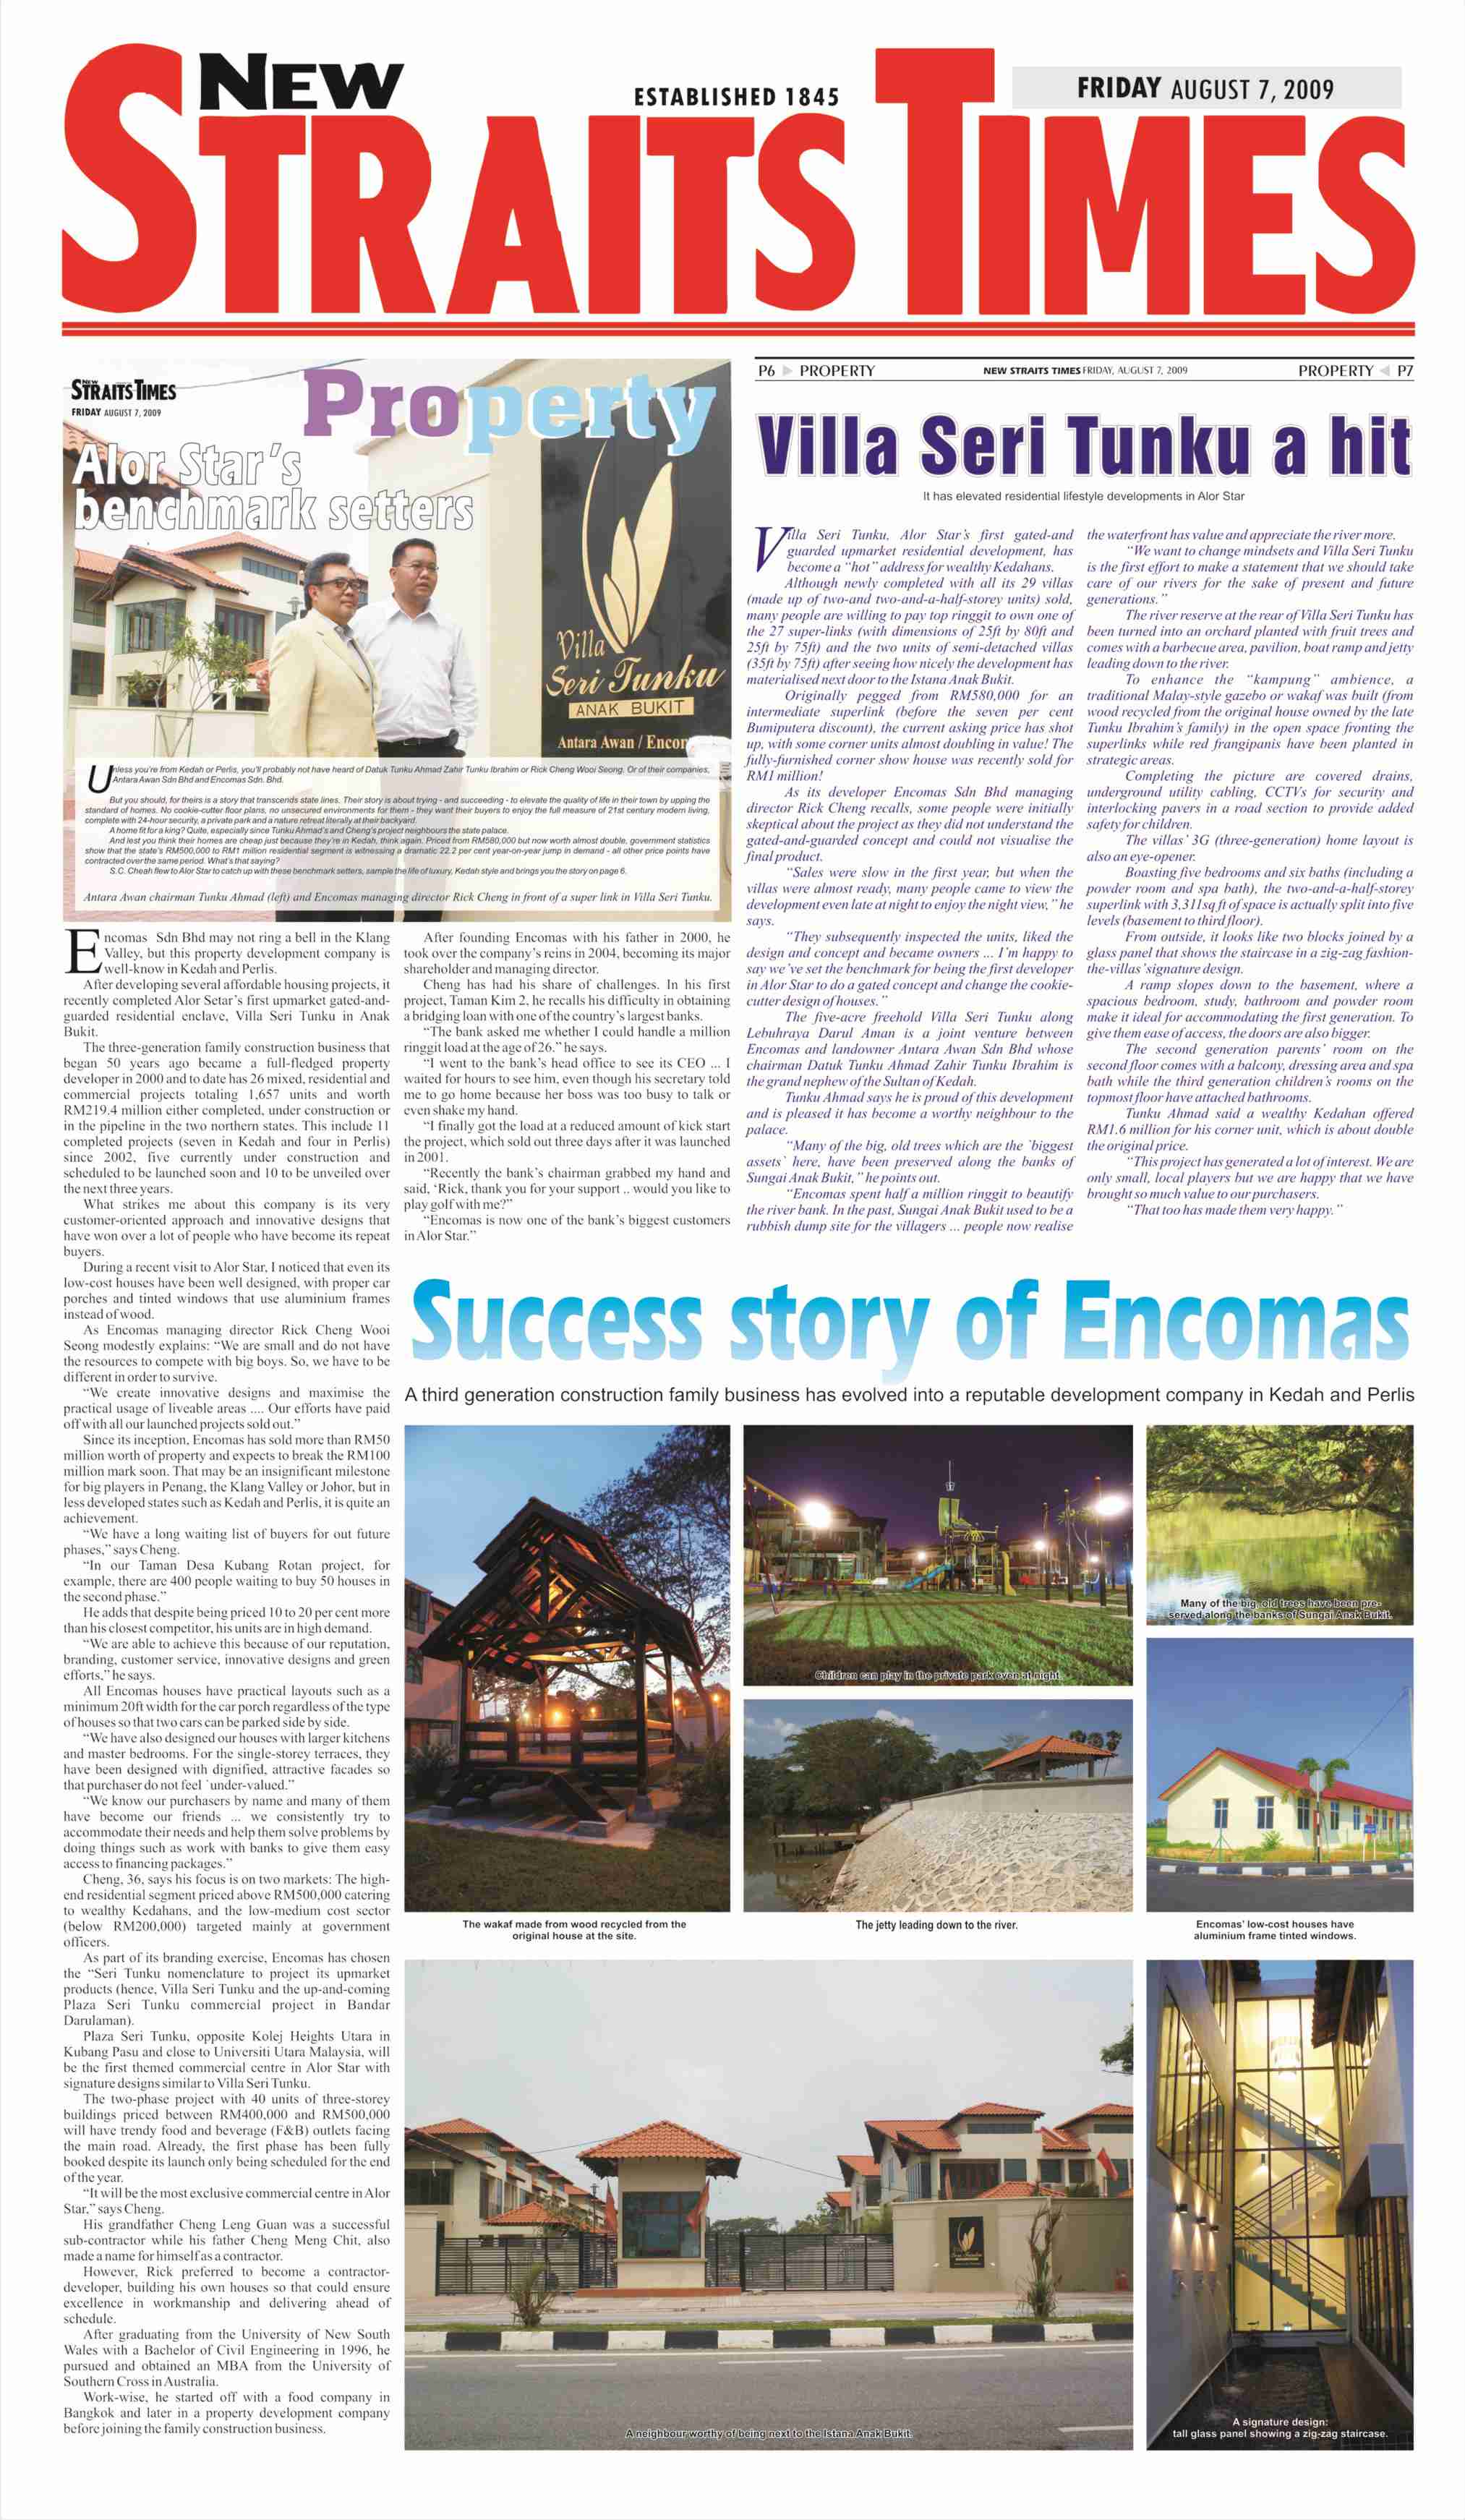 2009_08_07 NEW STRAITS TIMES - Success Story of Encomas